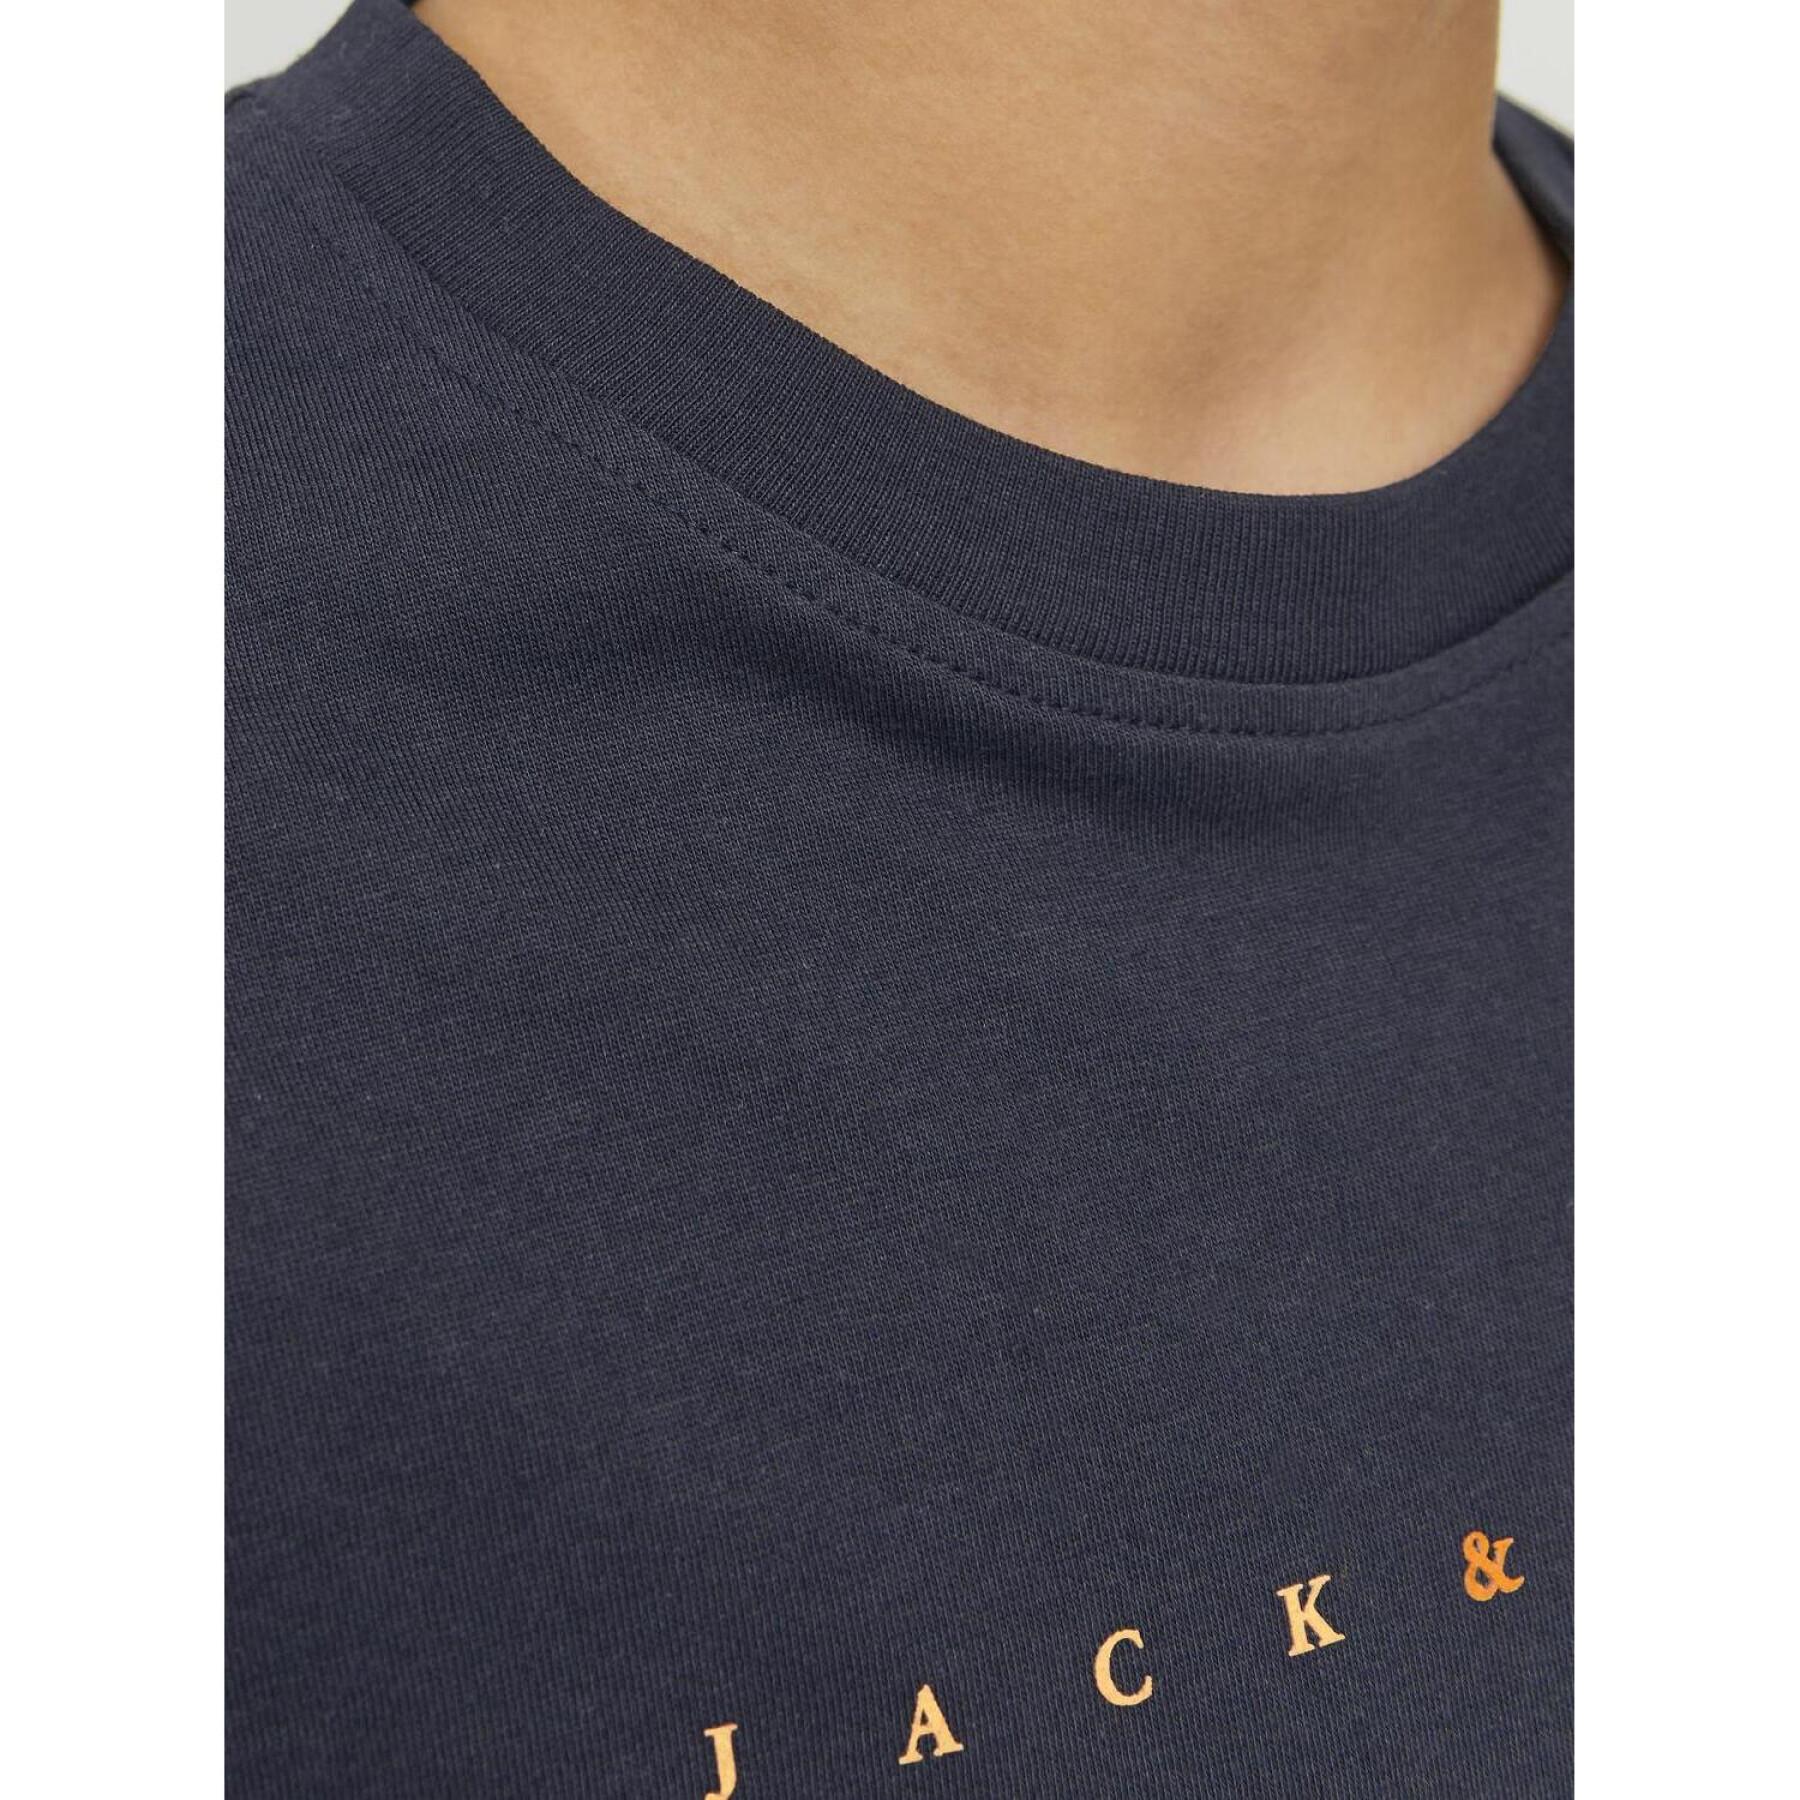 Child's T-shirt Jack & Jones Star